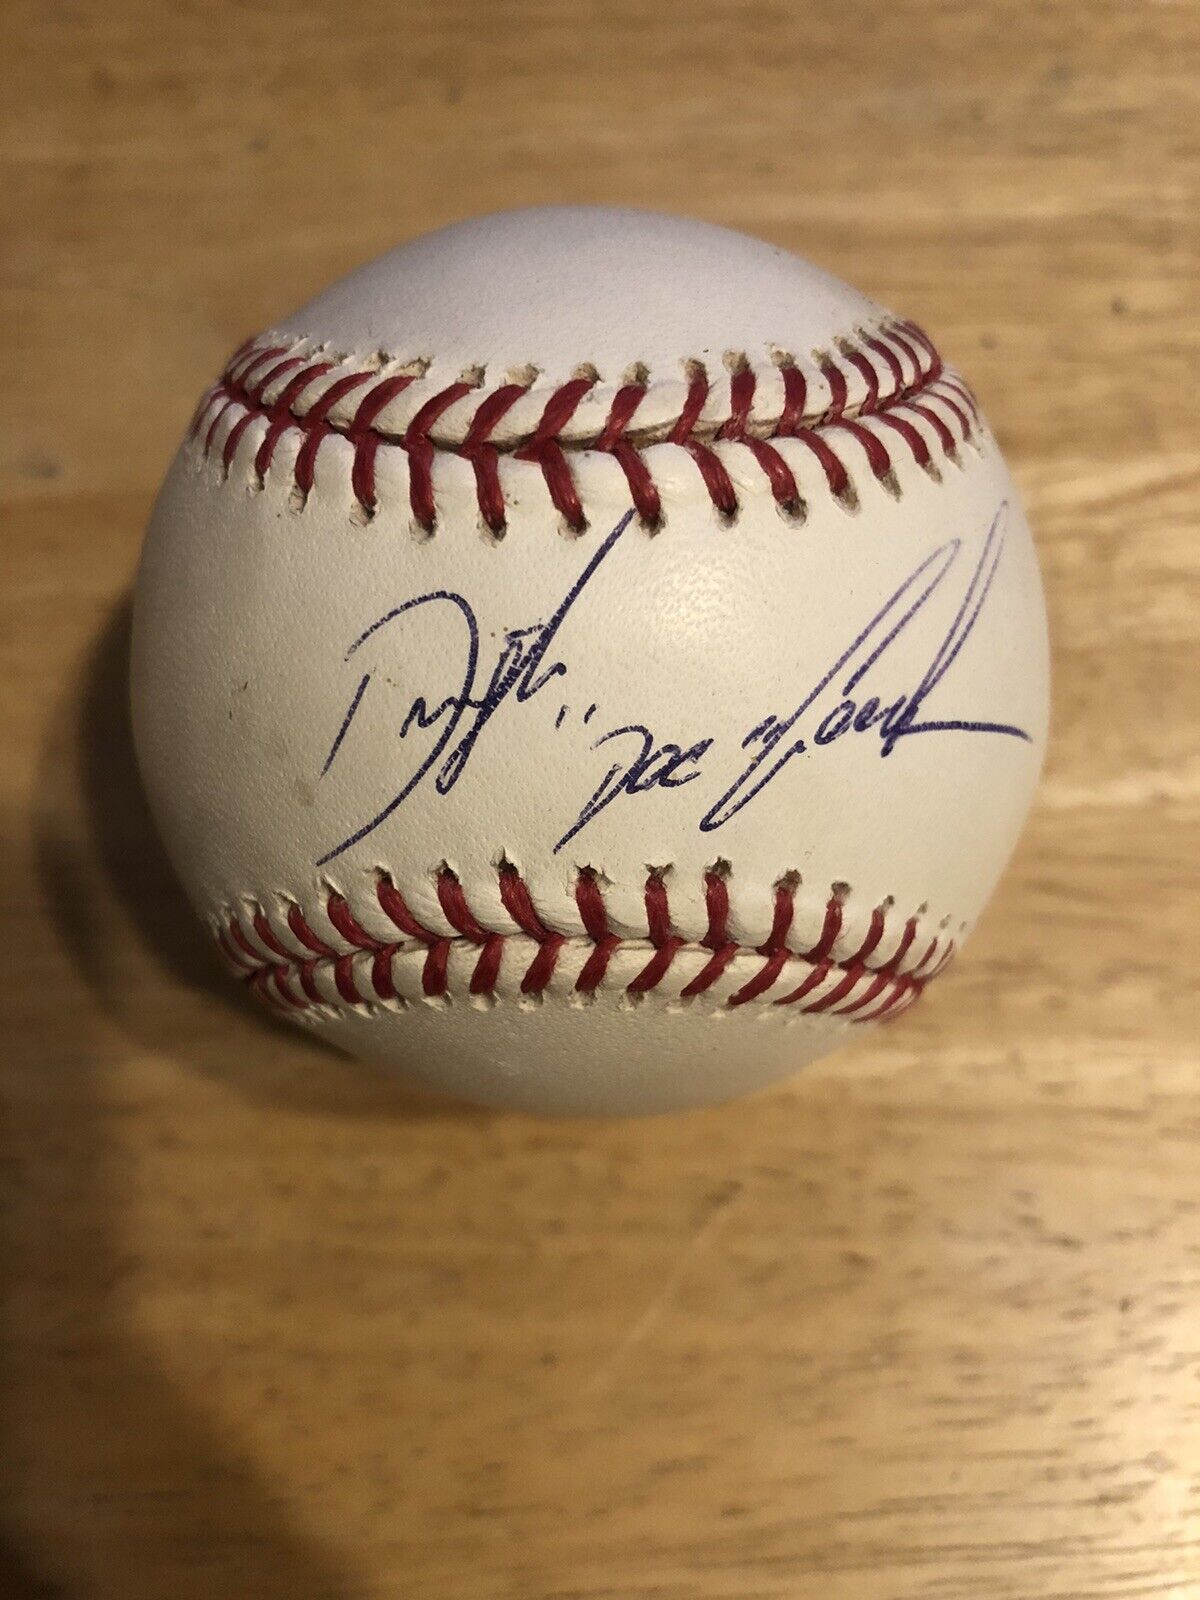 Dwight “Doc” Gooden signed baseball